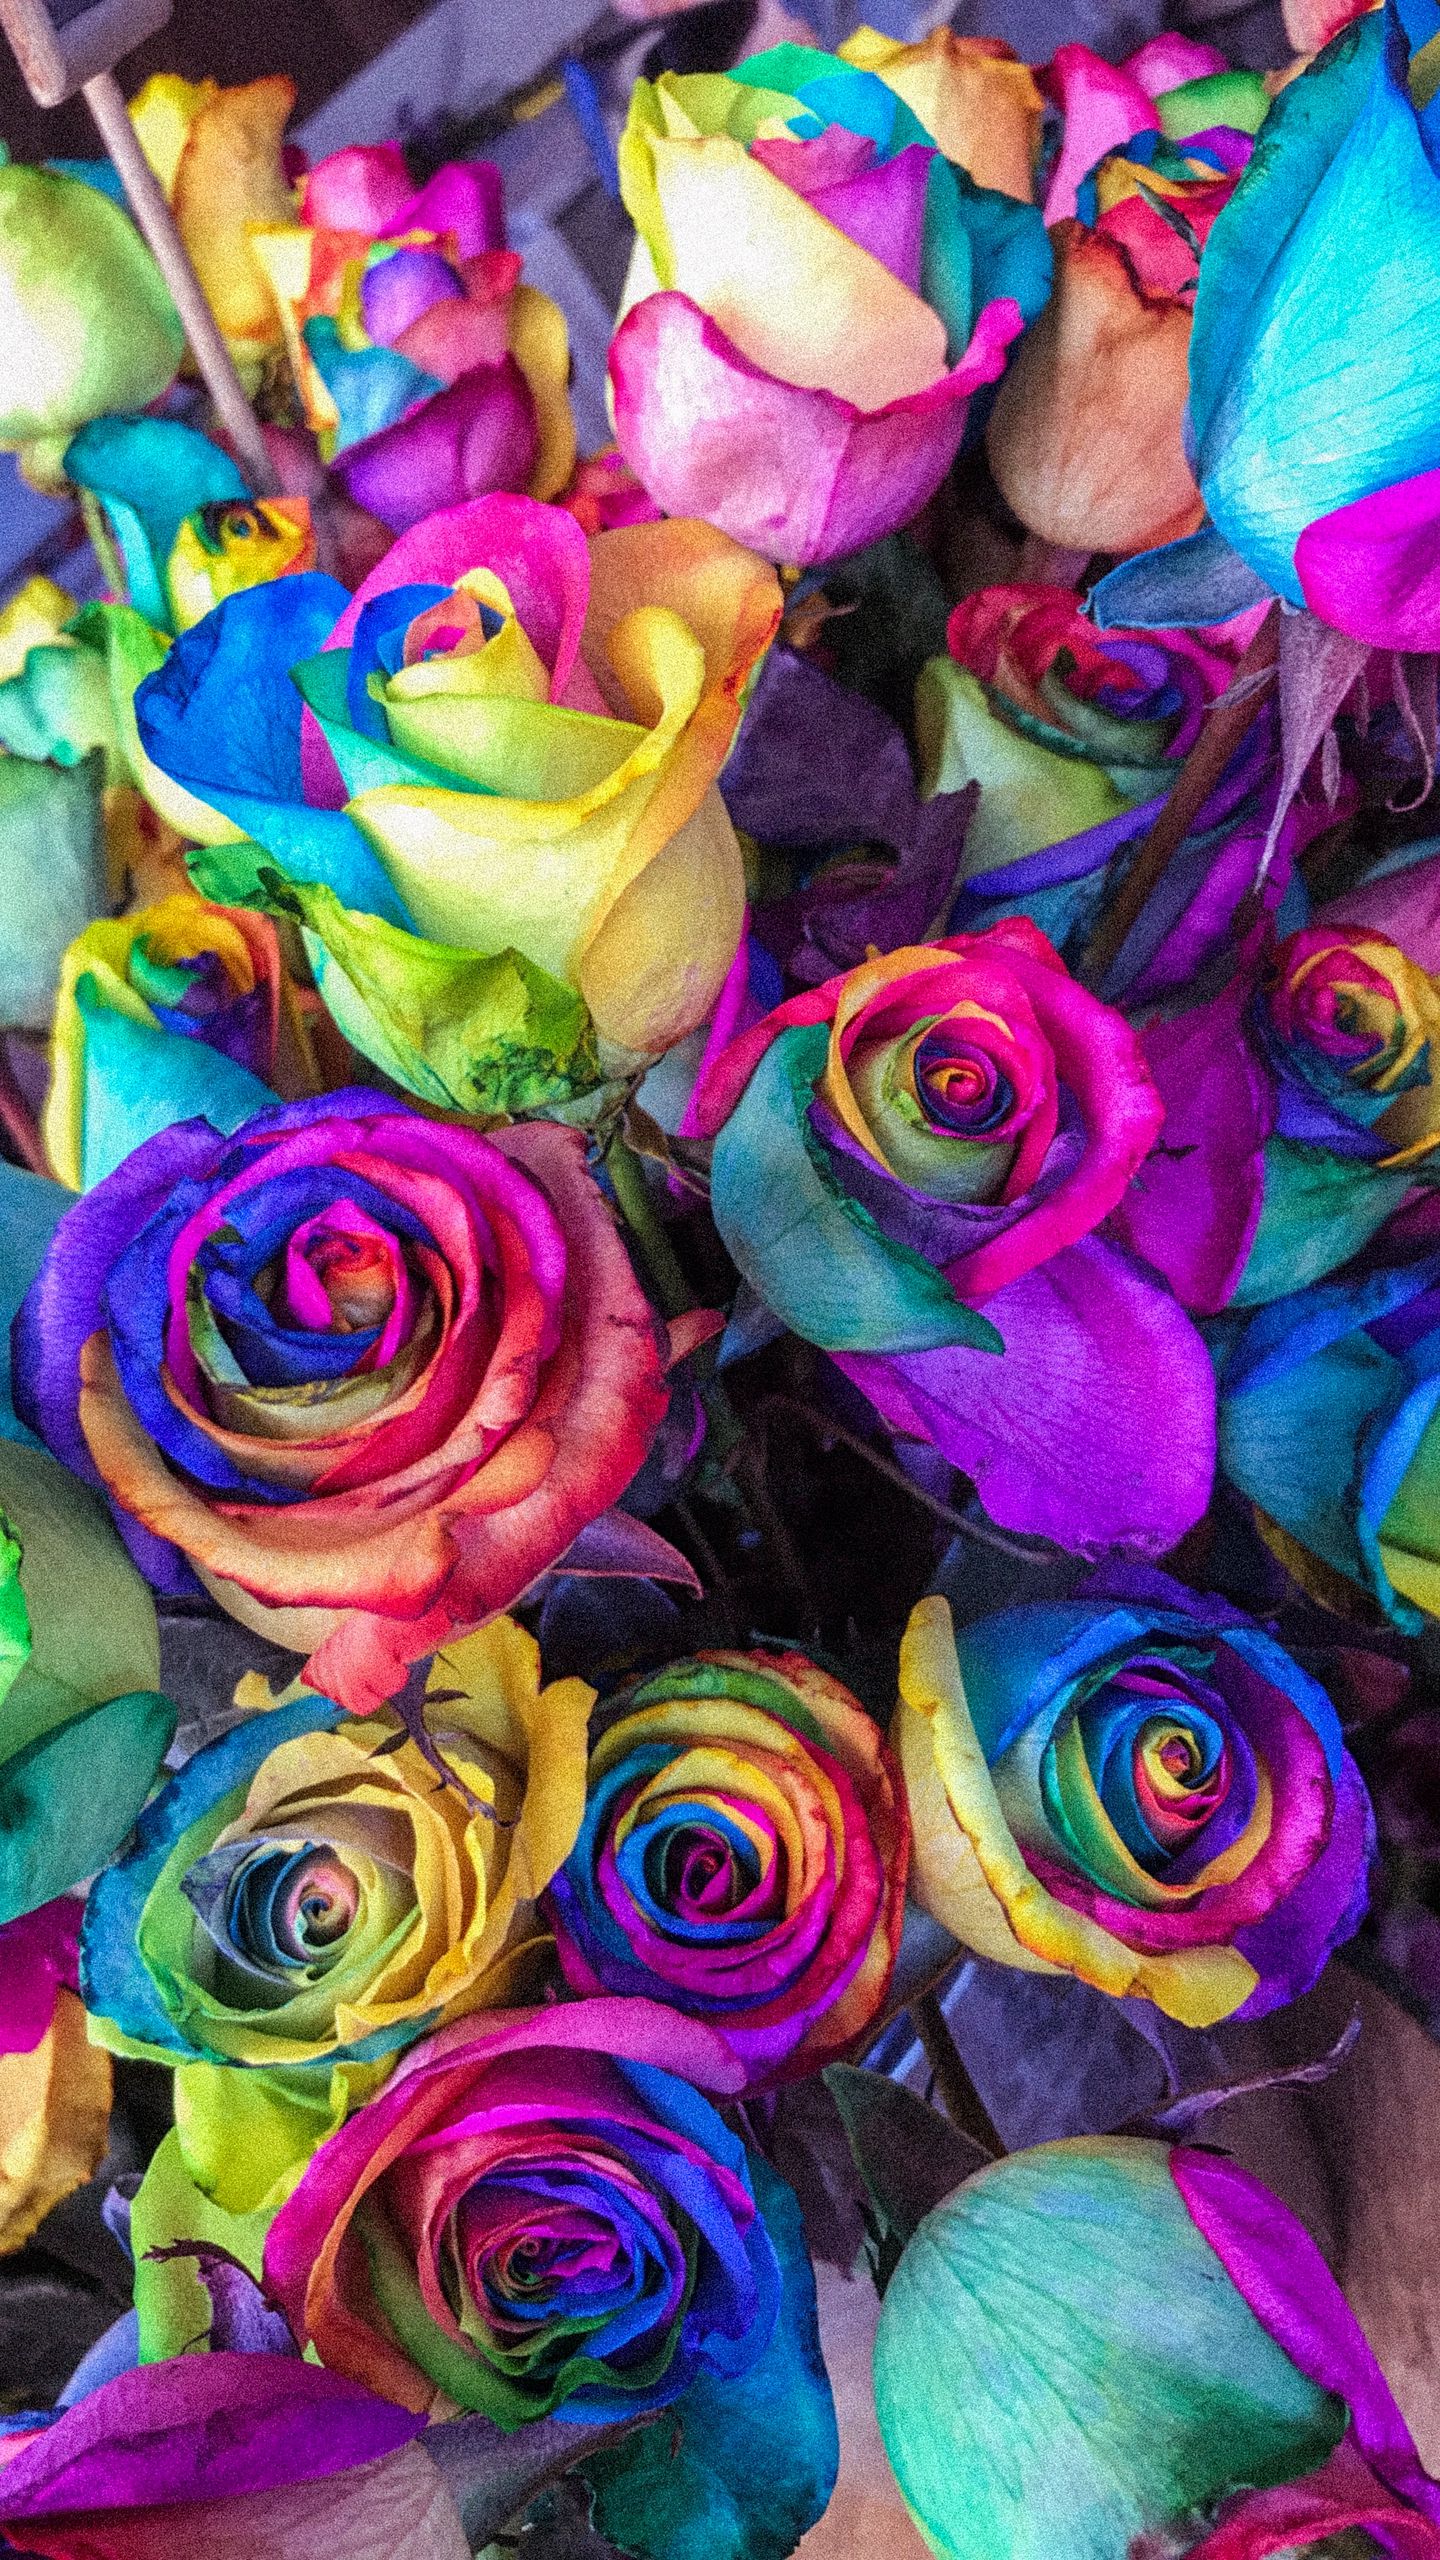 galaxy s7 wallpaper hd 1080p,rose,rainbow rose,flower,rose family,purple